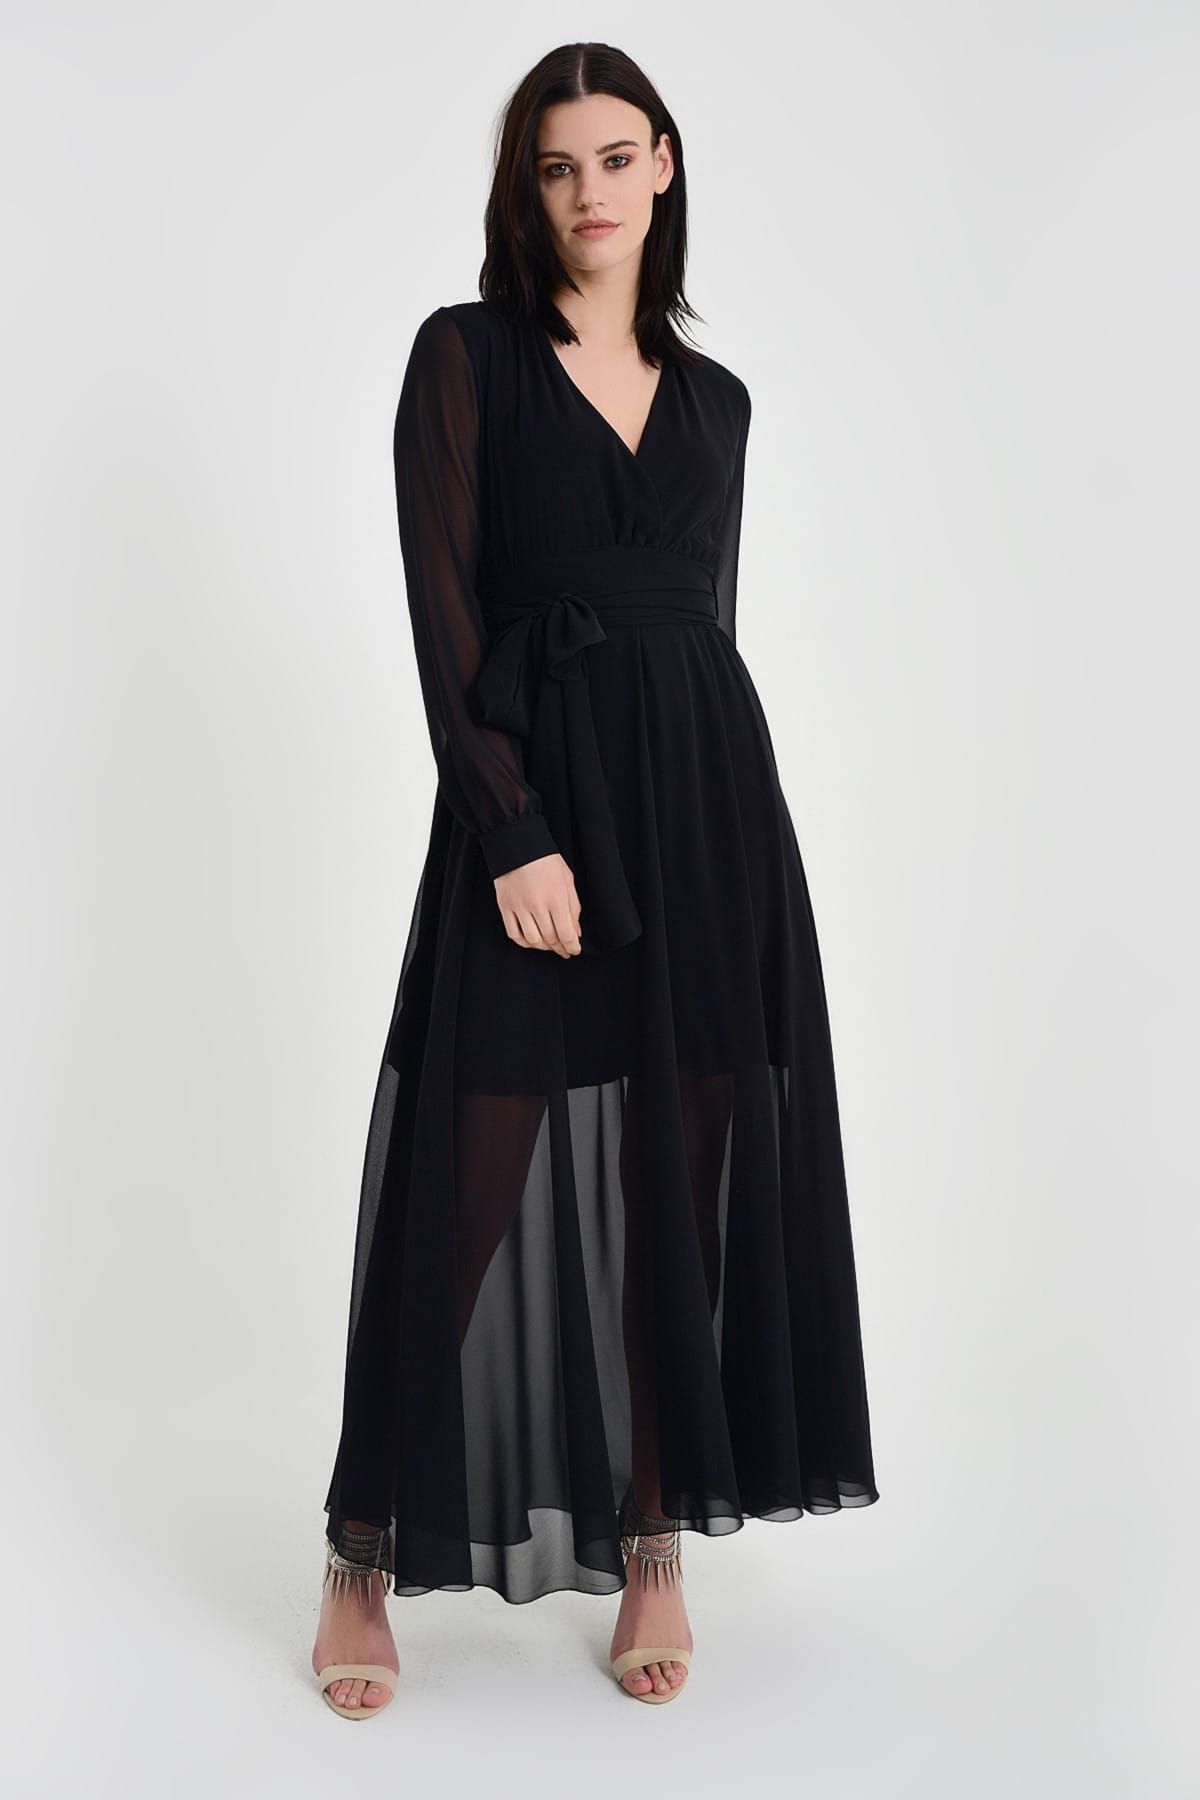 Laranor Kadın Siyah Kruvaze Yaka Şifon Elbise 19L6660